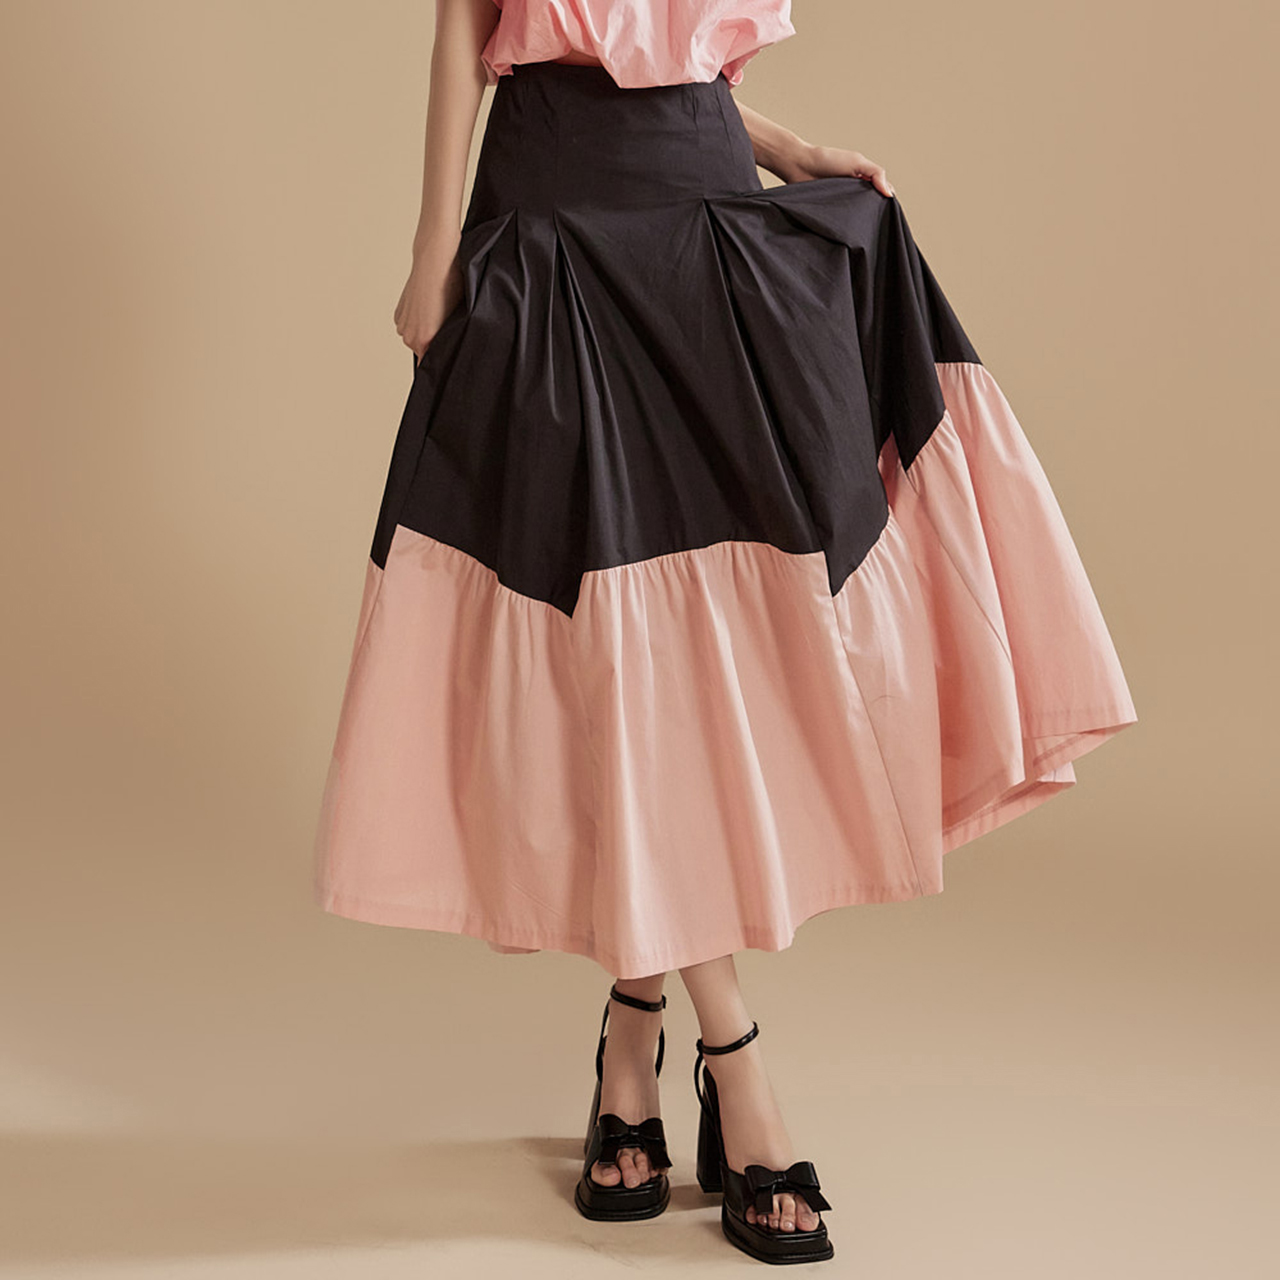 SK2302 Color scheme Long Skirt Korea